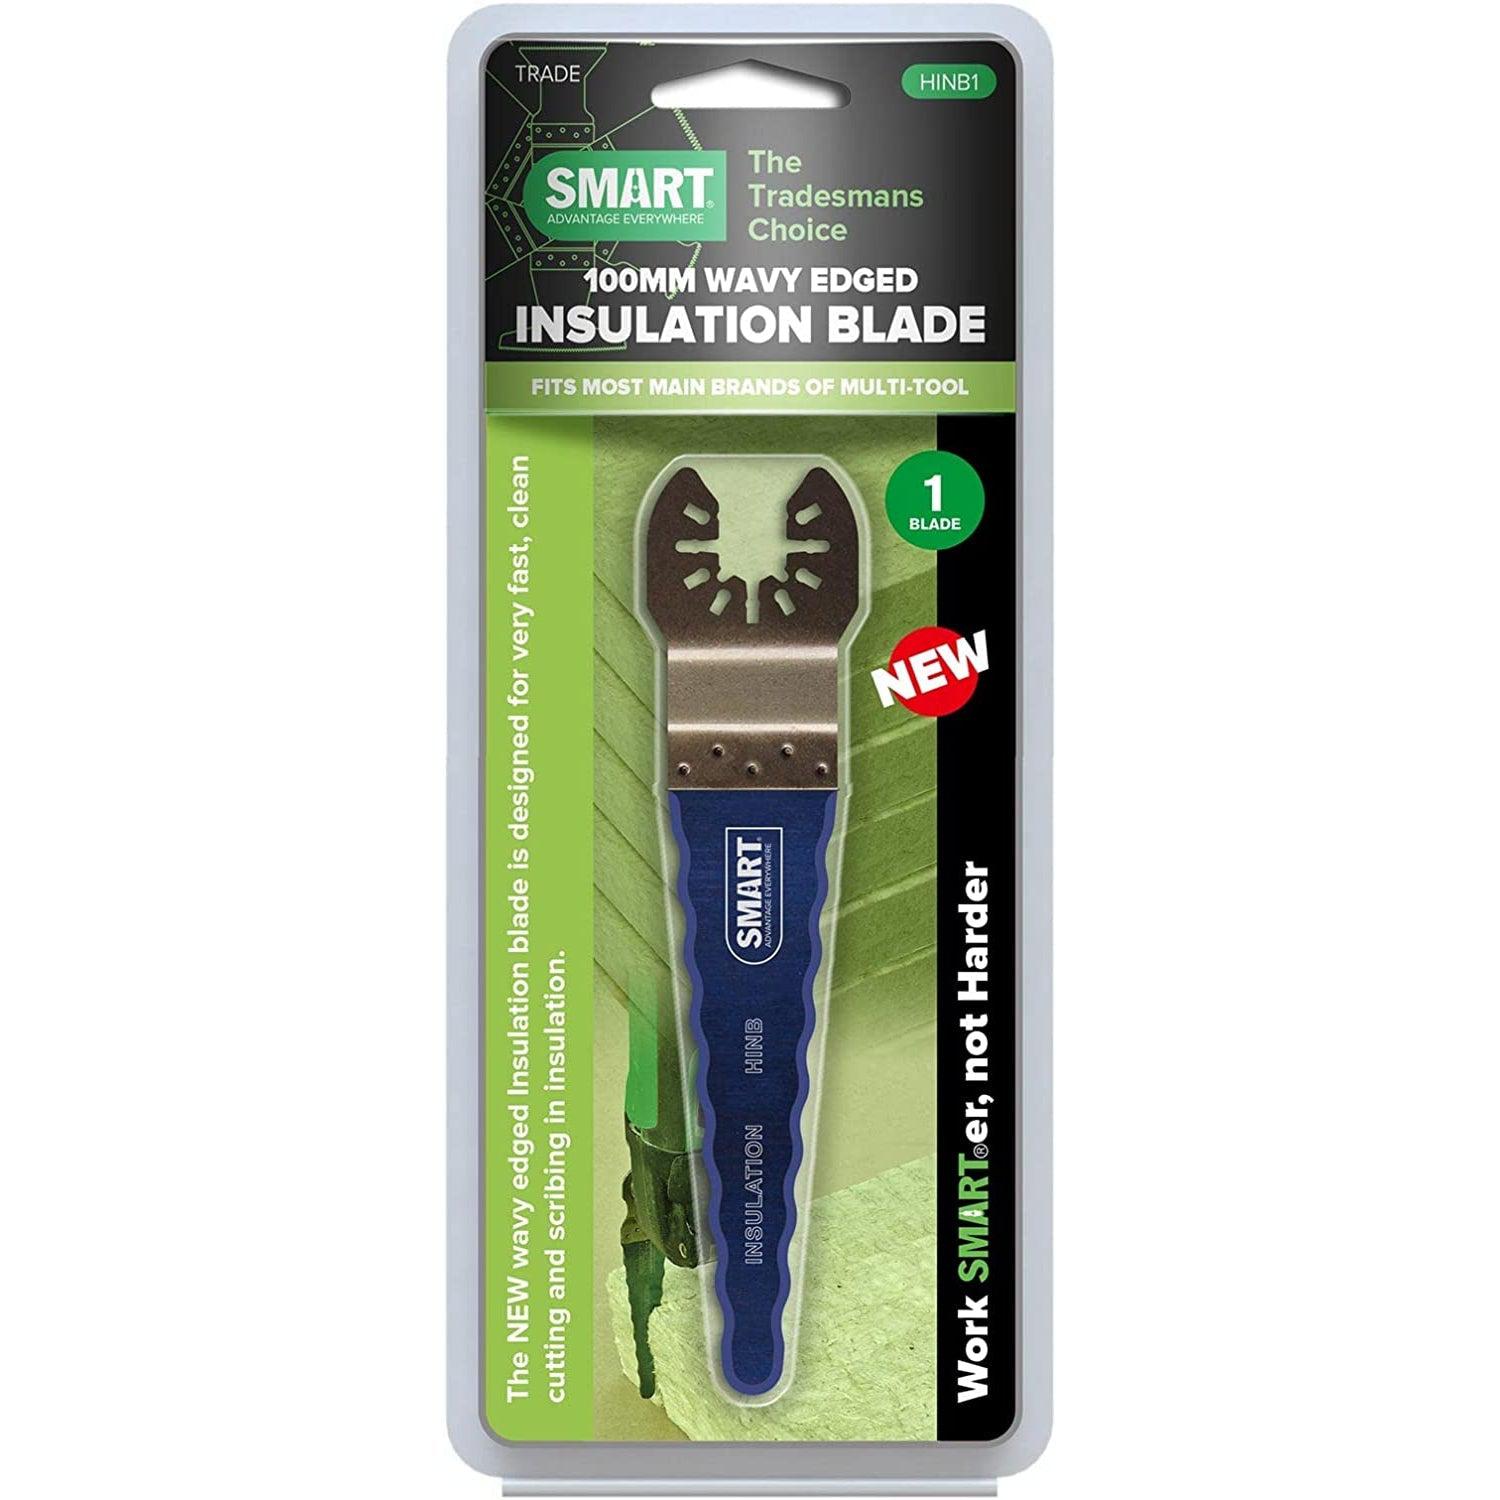 Smart HINB1 100MM Insulation Blade